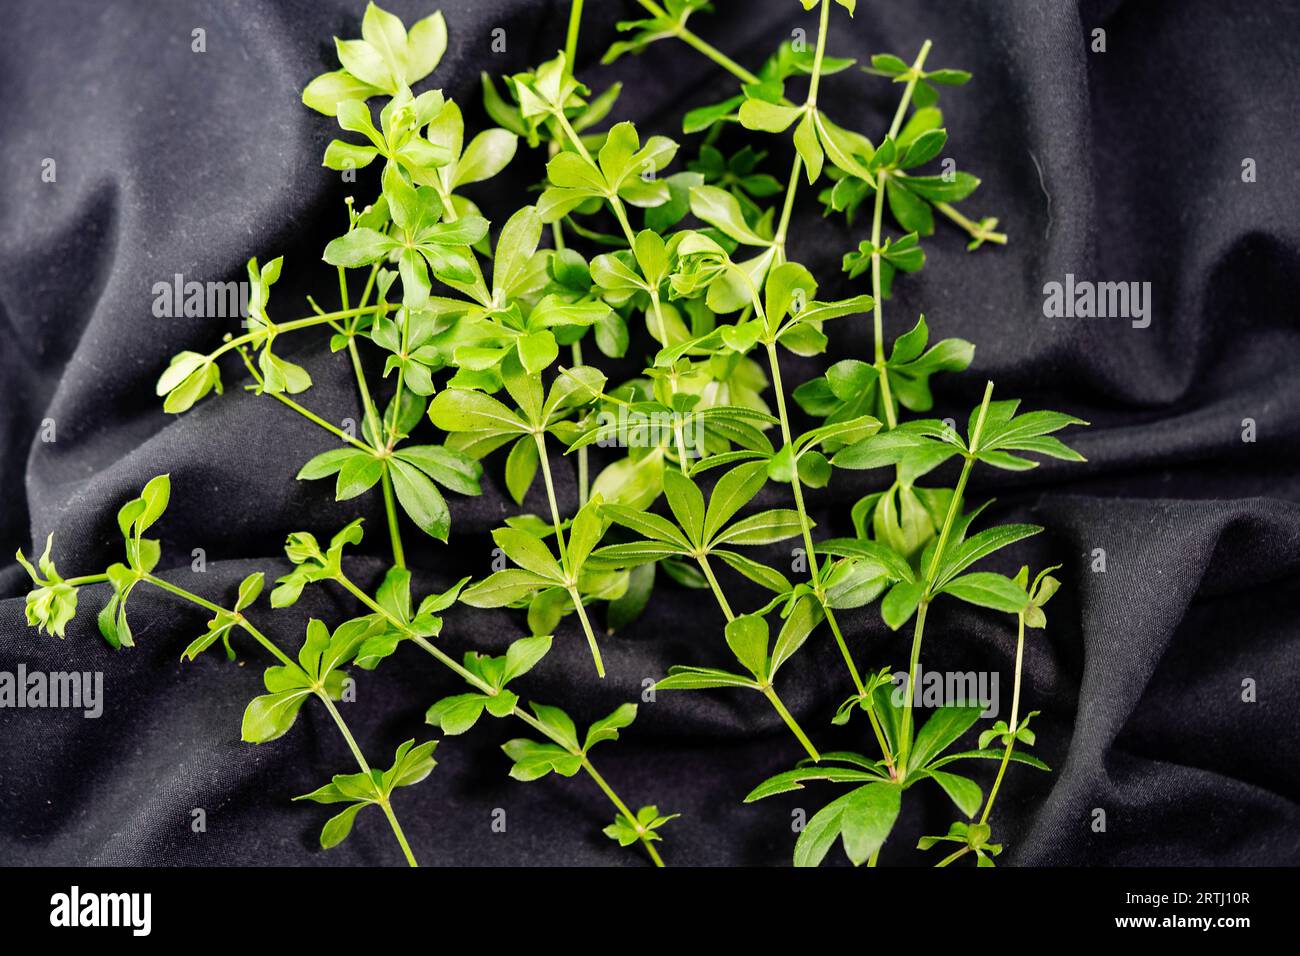 Leaves of the woodruff plant Galium odoratum fresh and dried Stock Photo